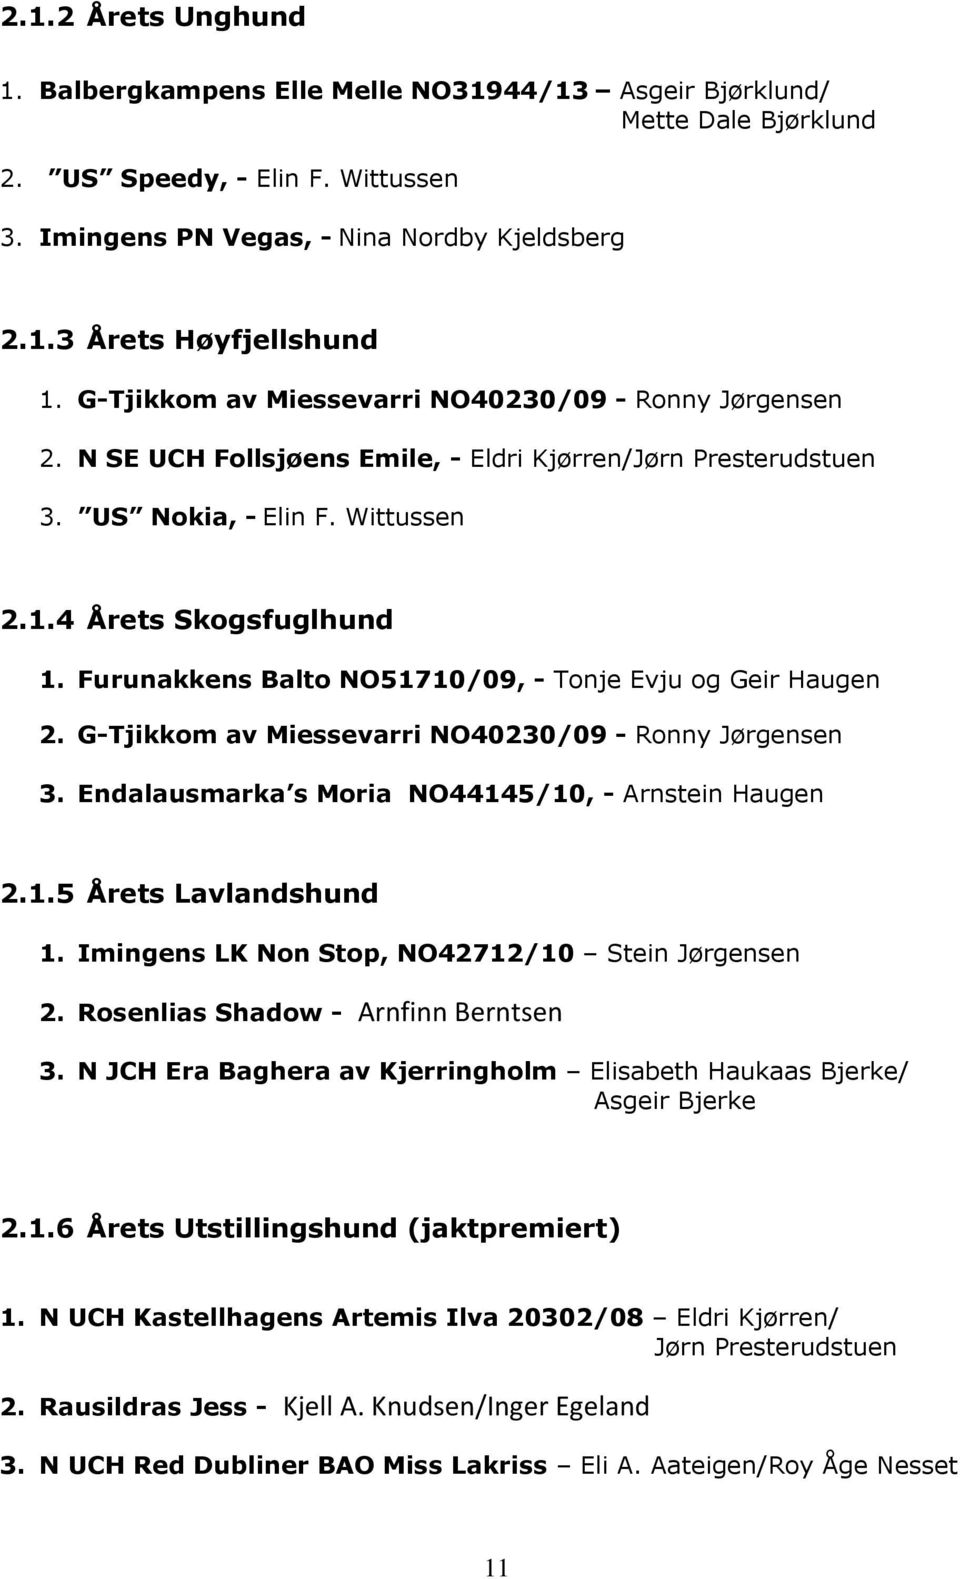 Furunakkens Balto NO51710/09, - Tonje Evju og Geir Haugen 2. G-Tjikkom av Miessevarri NO40230/09 - Ronny Jørgensen 3. Endalausmarka s Moria NO44145/10, - Arnstein Haugen 2.1.5 Årets Lavlandshund 1.